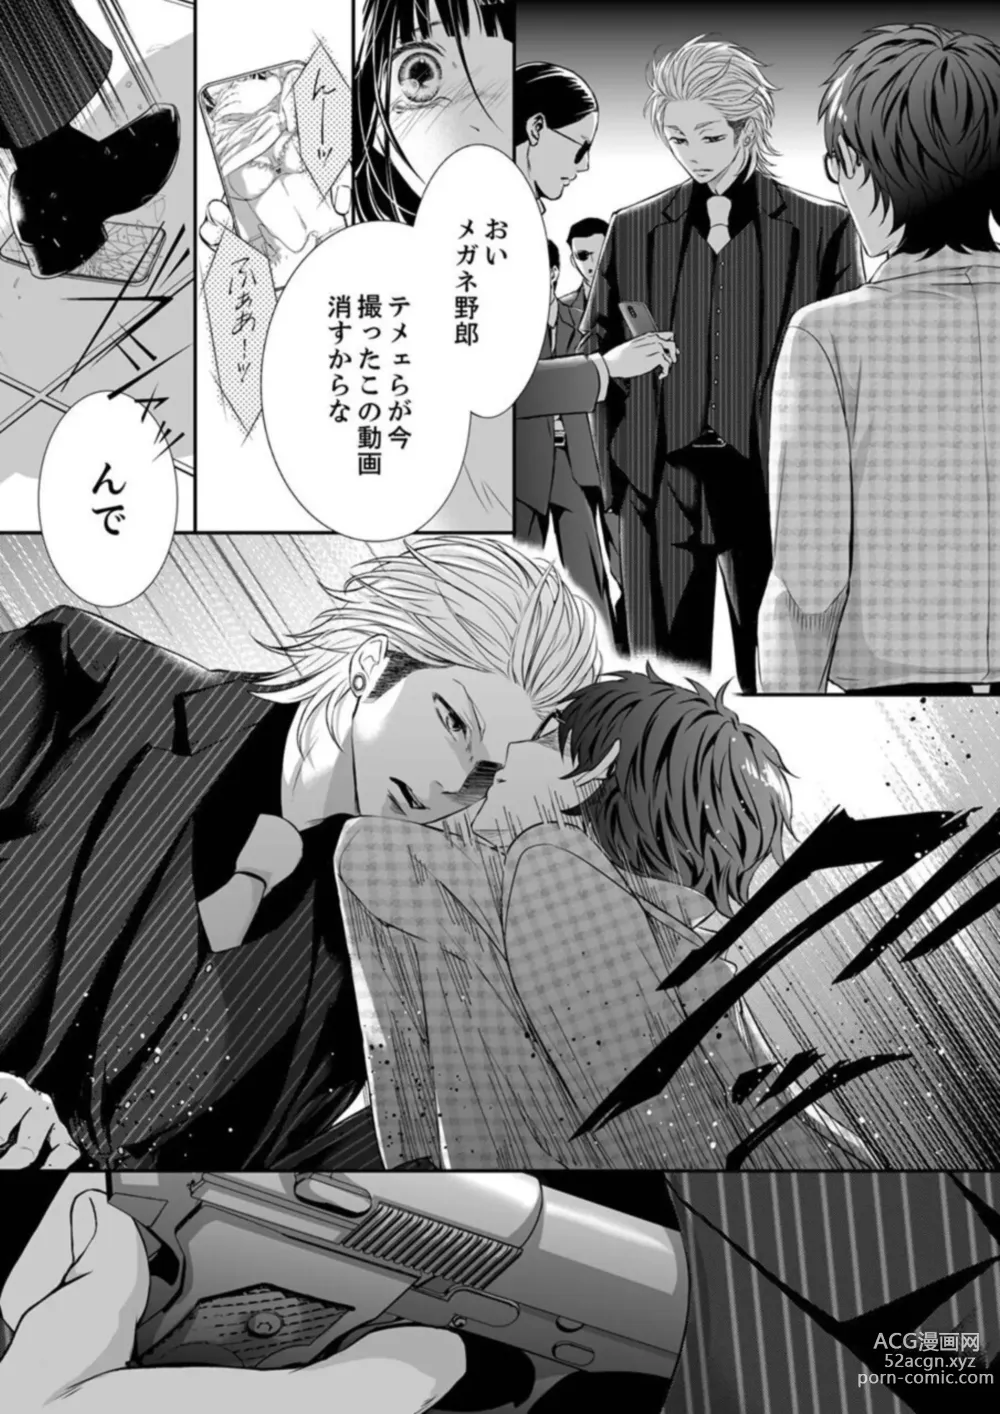 Page 21 of manga Juusei to Aegigoe ~ Uchinuku Tabi ni, Kikasero yo - Gun shot and Panting 1